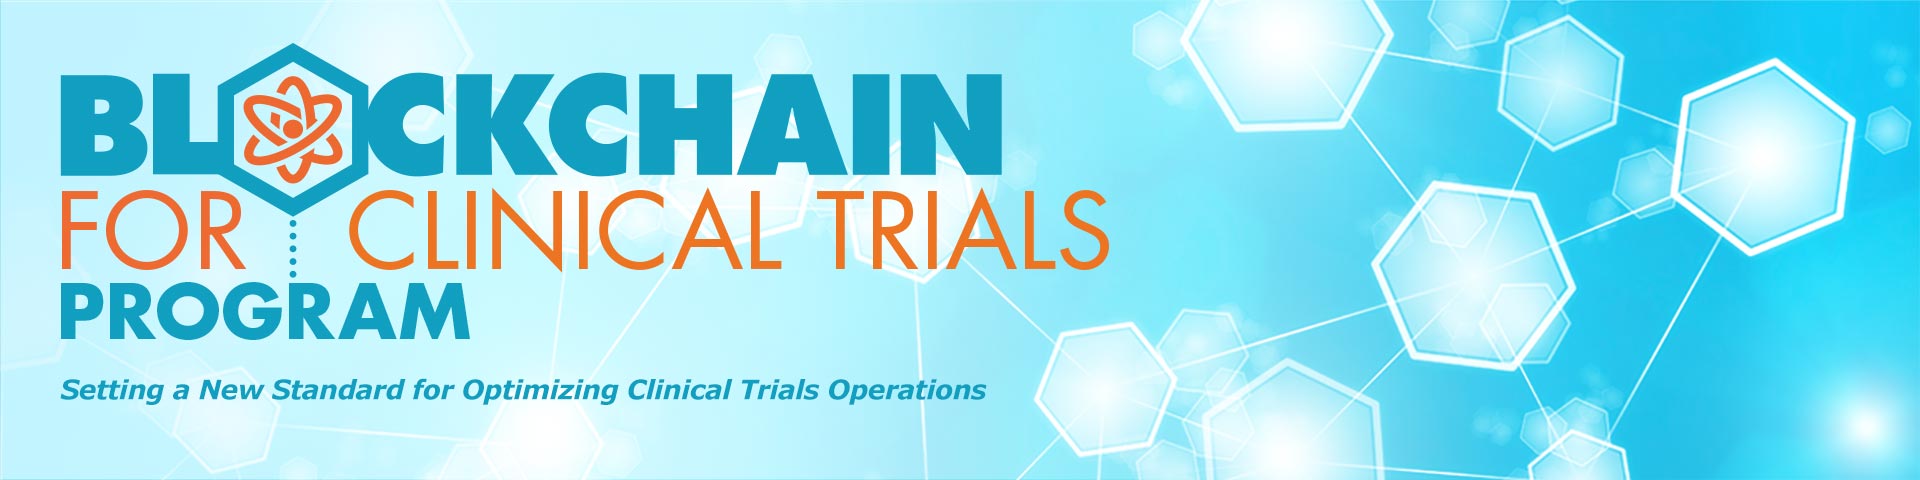 Blockchain for Clinical Trials Program